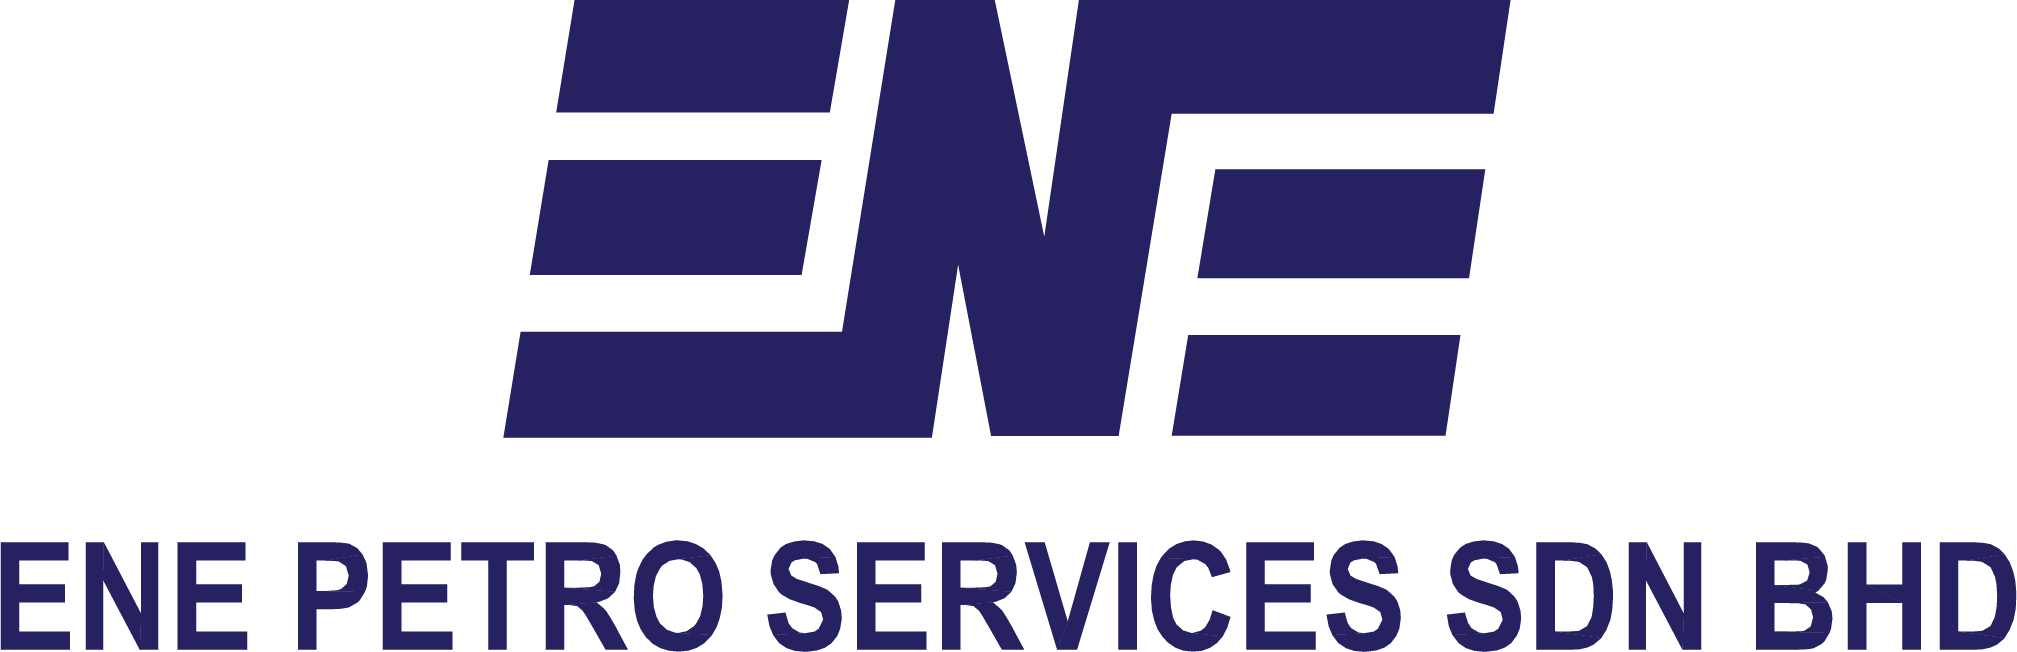 ENE Petro Services